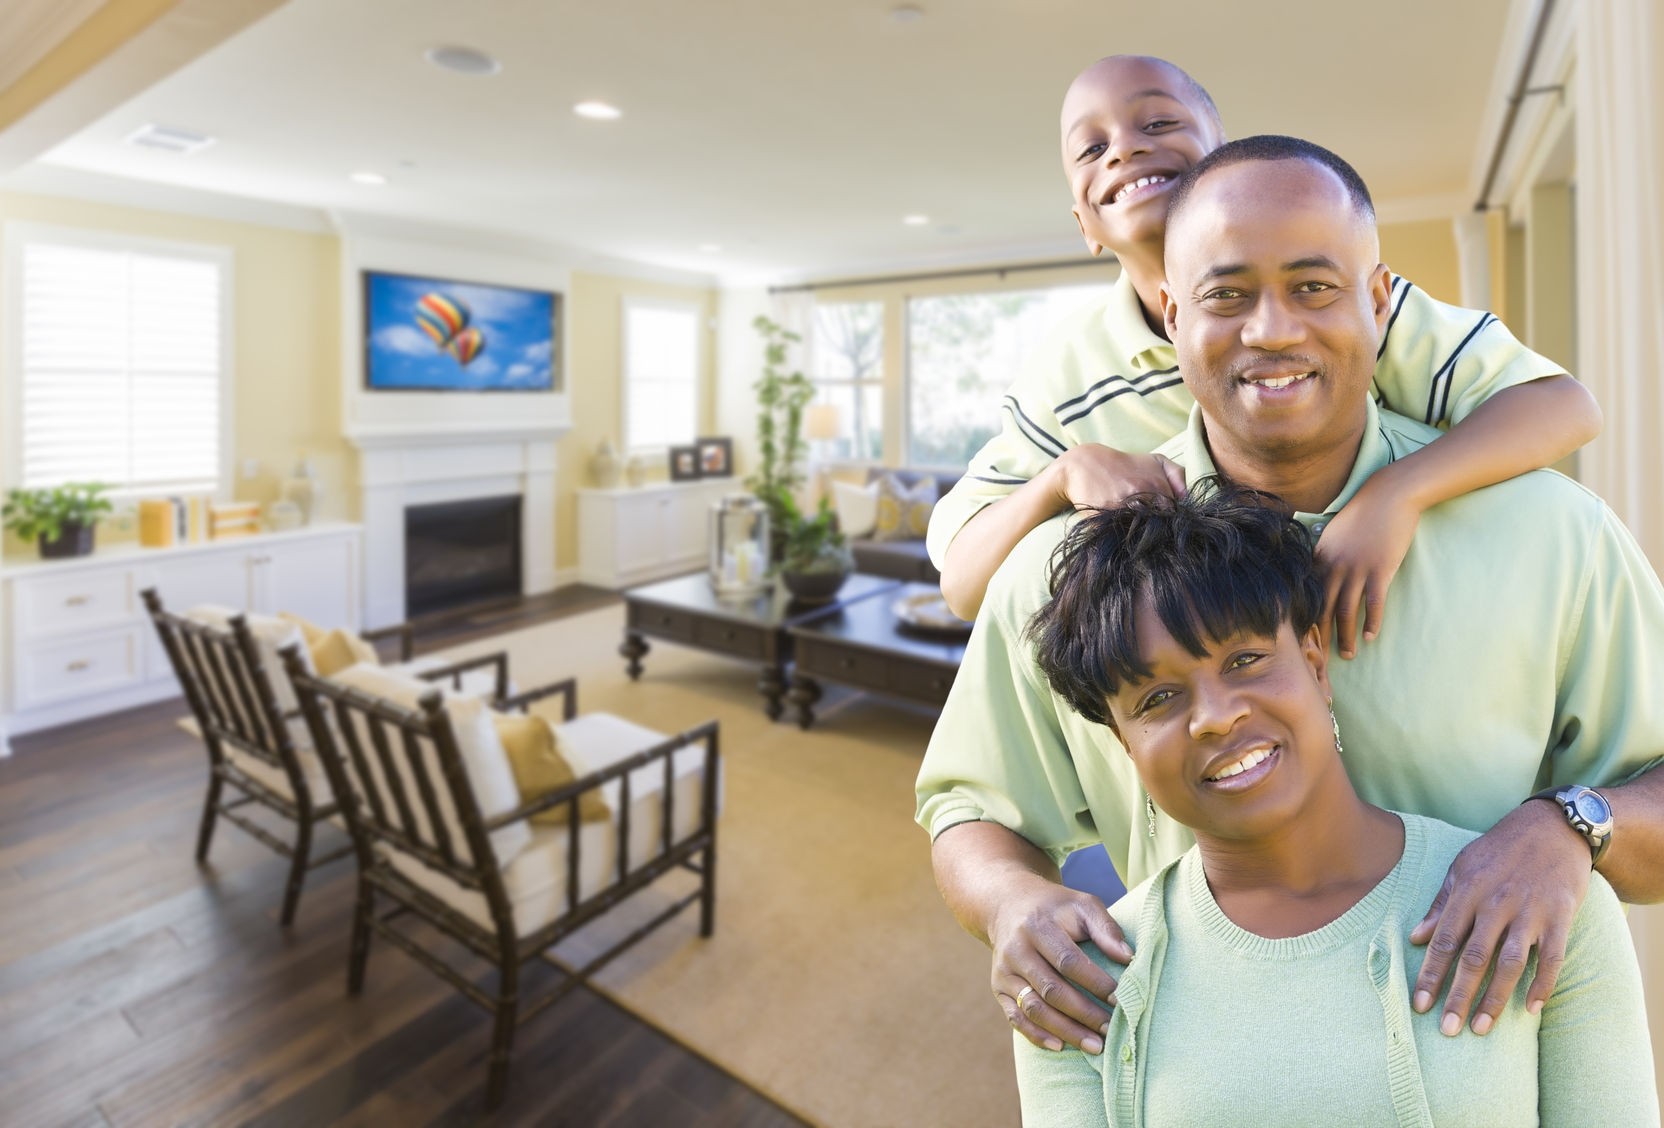 refinance home loan Refinance Home Loan MA Jumbo loan mortgage broker Cape Cod